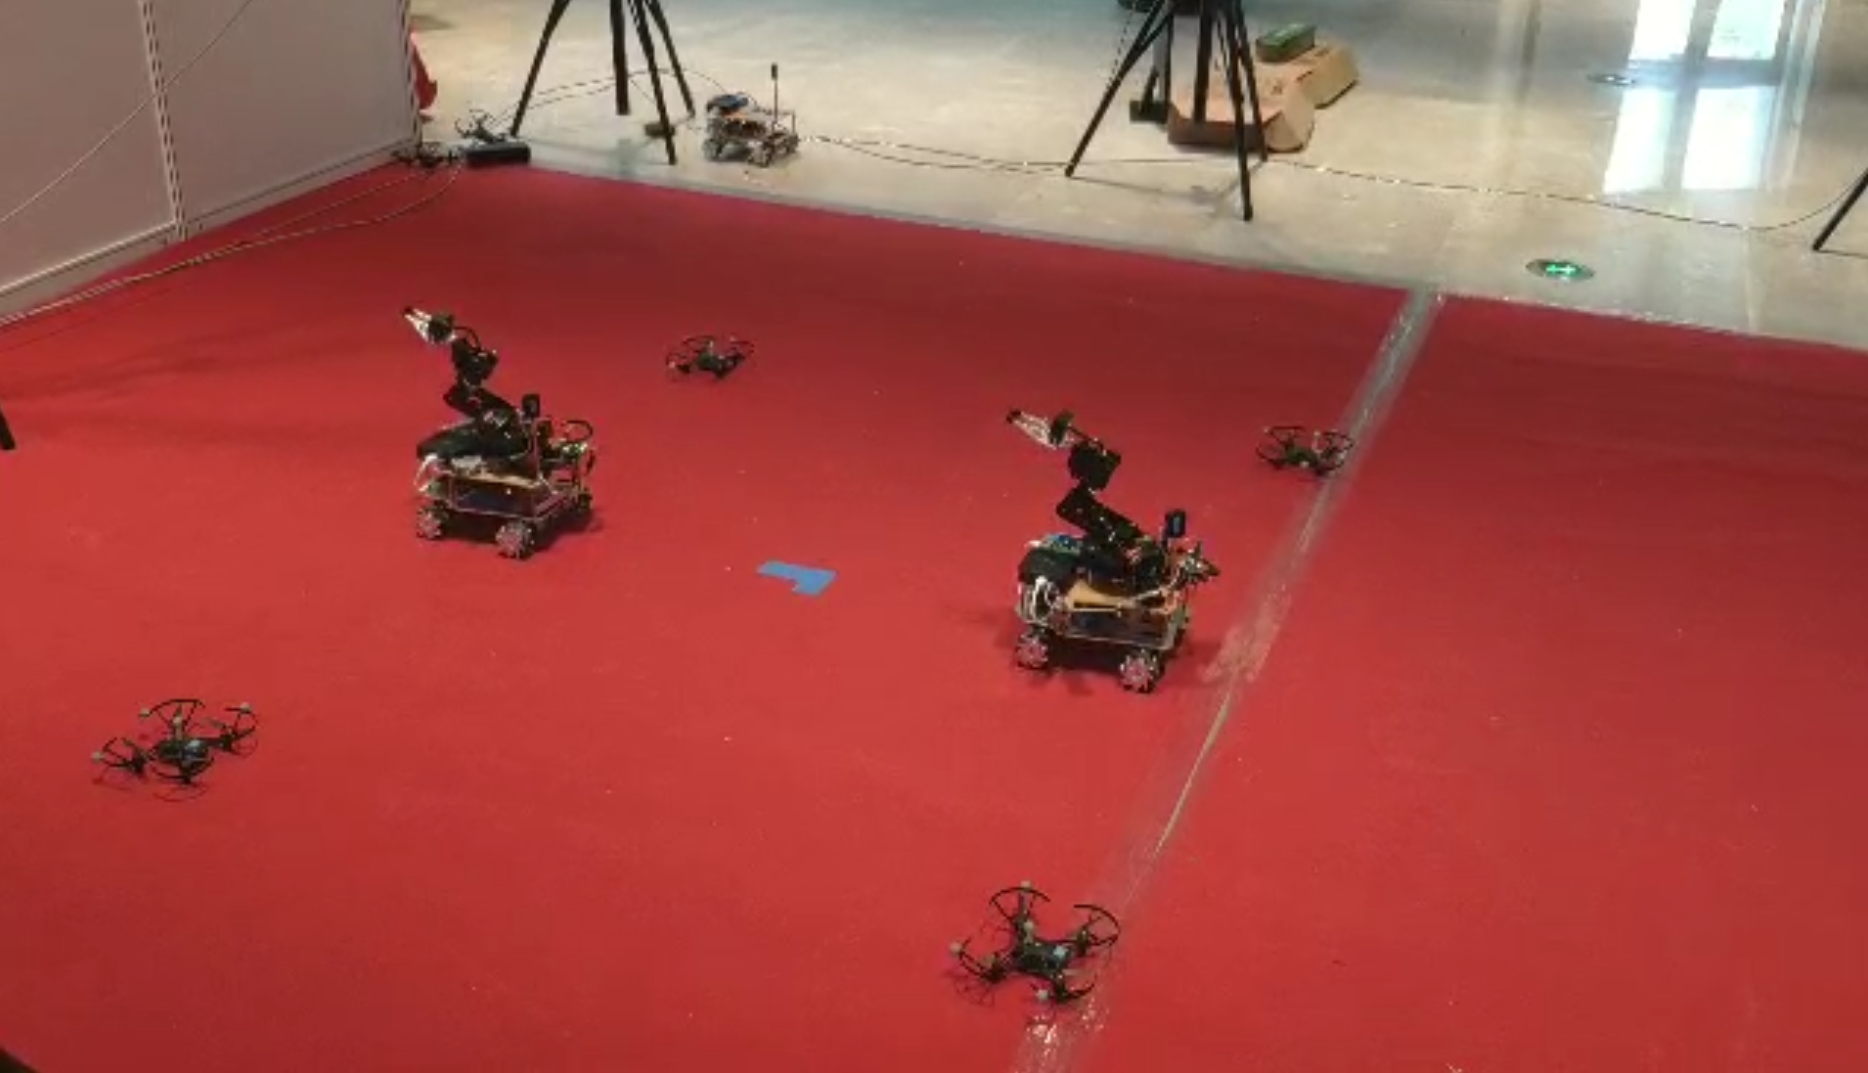 Omnidirectional-swarm-intelligent-robot.png